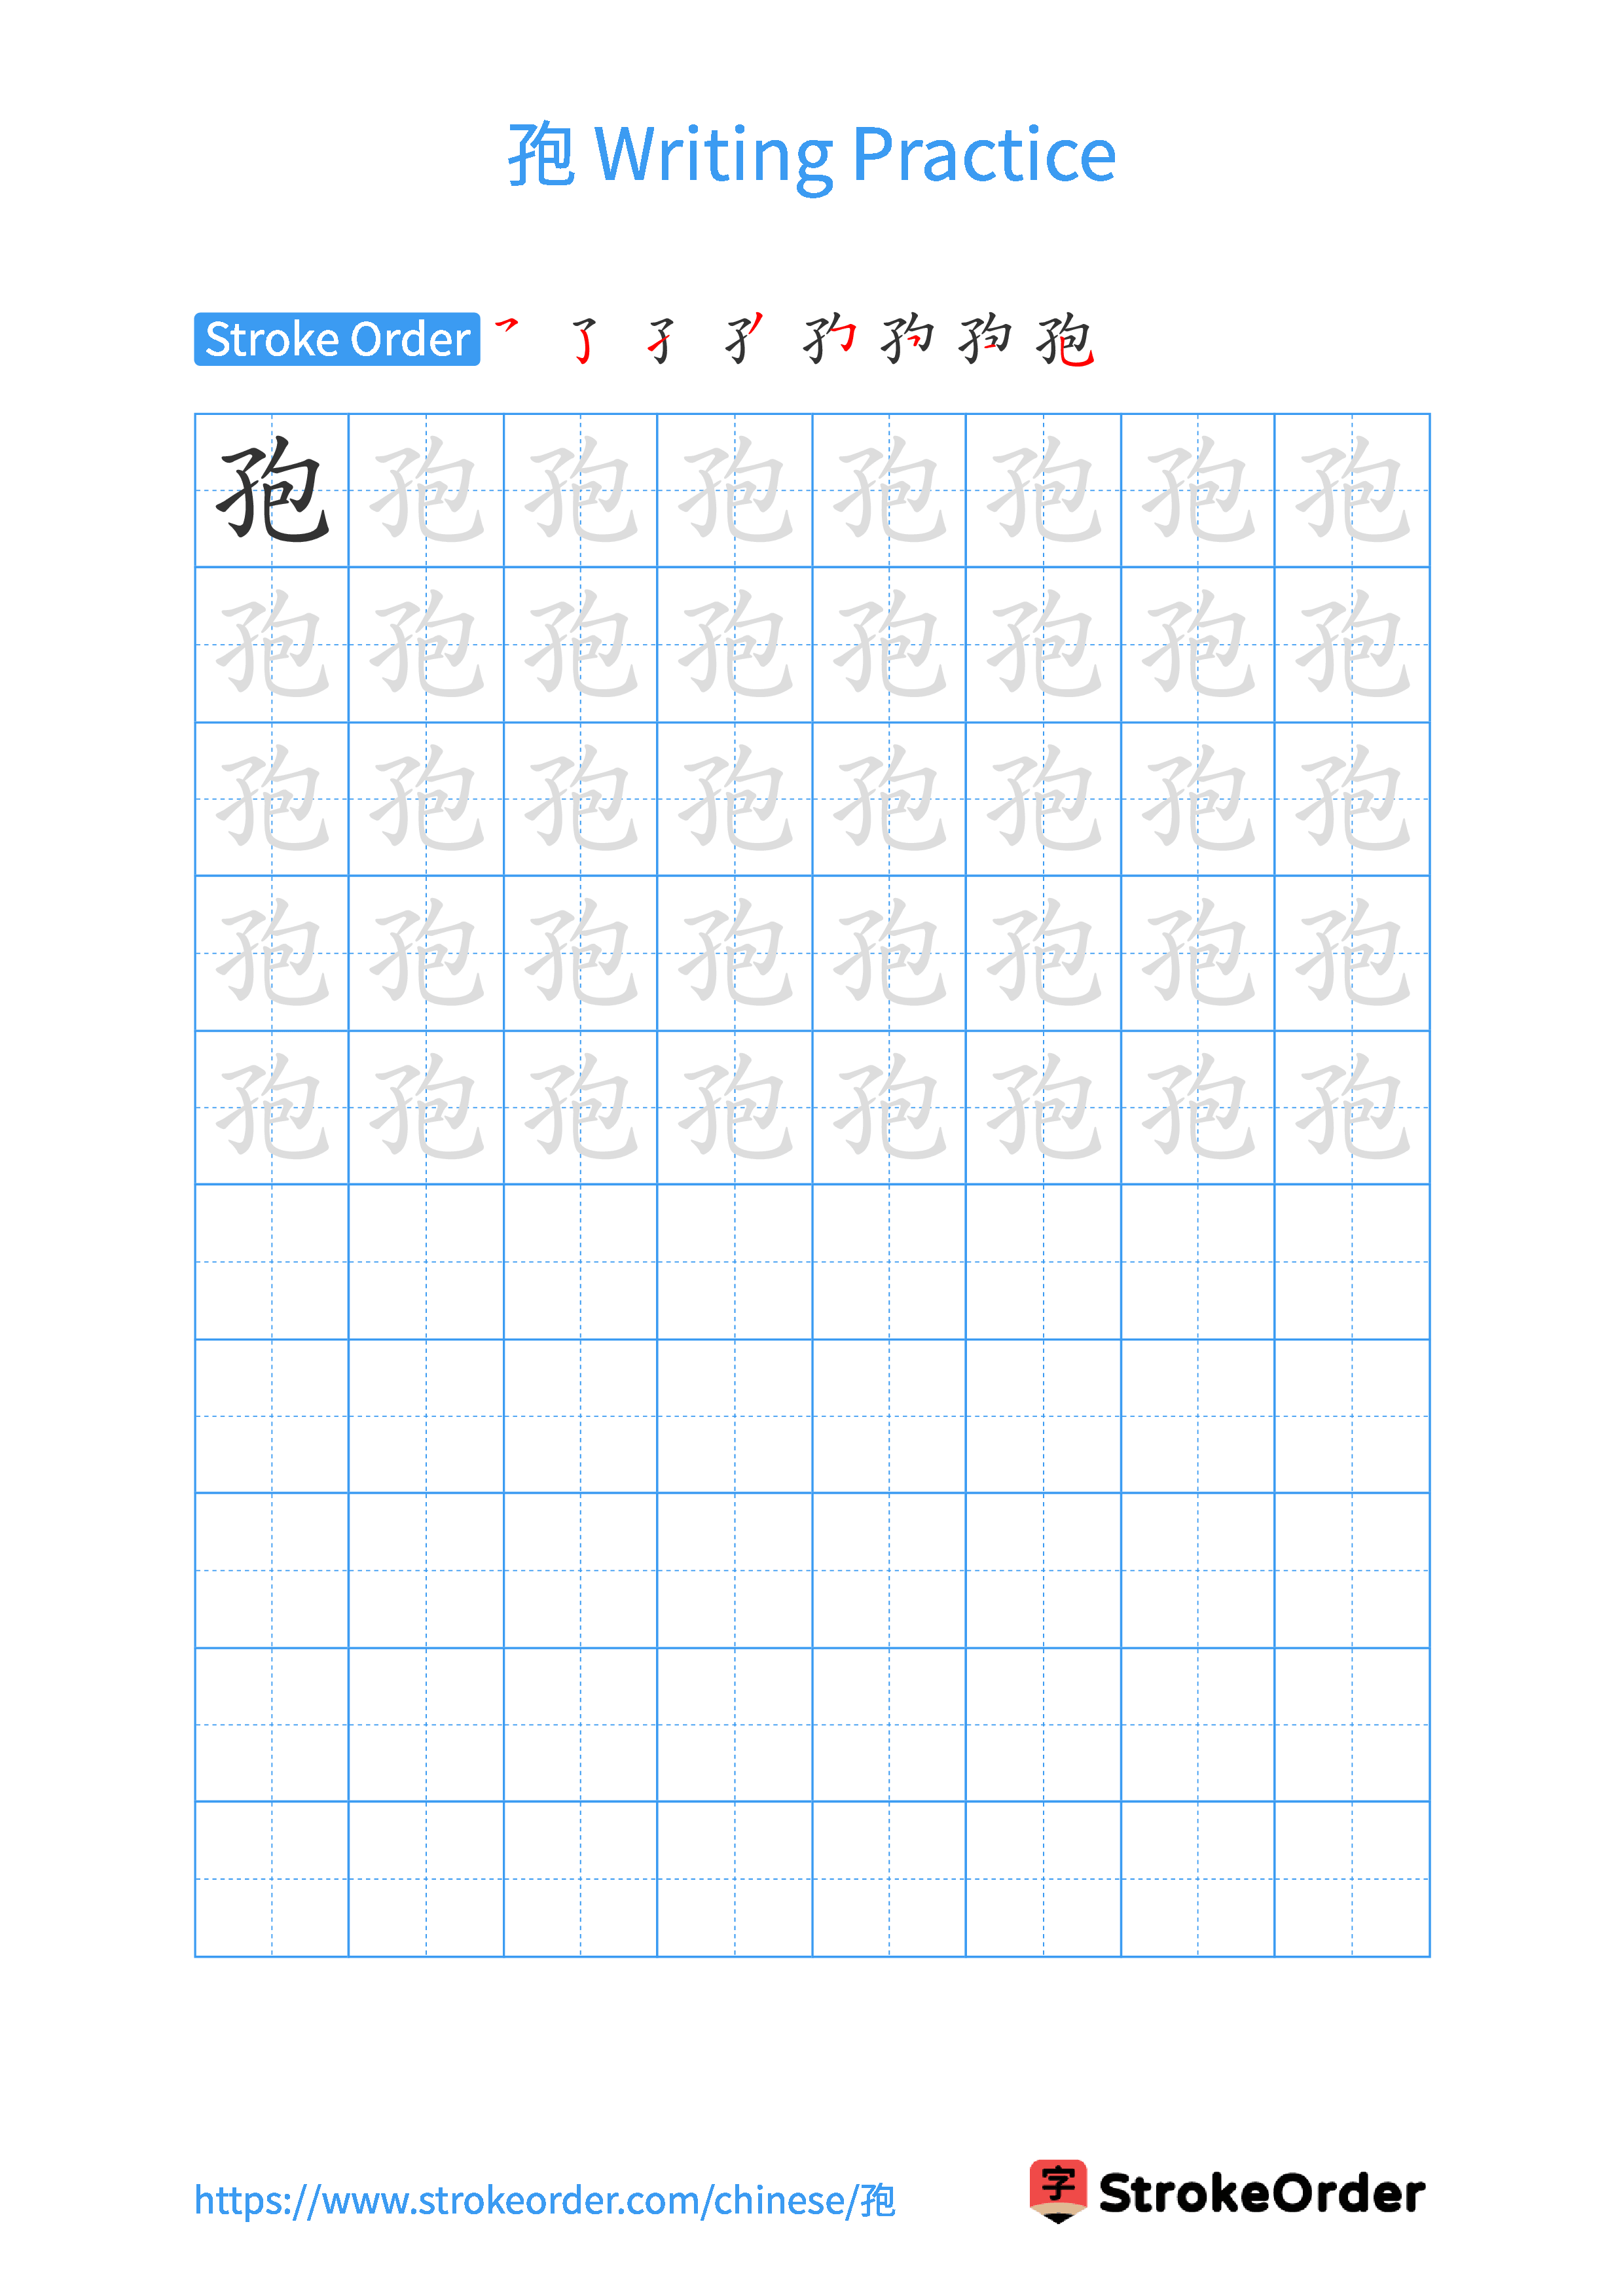 Printable Handwriting Practice Worksheet of the Chinese character 孢 in Portrait Orientation (Tian Zi Ge)